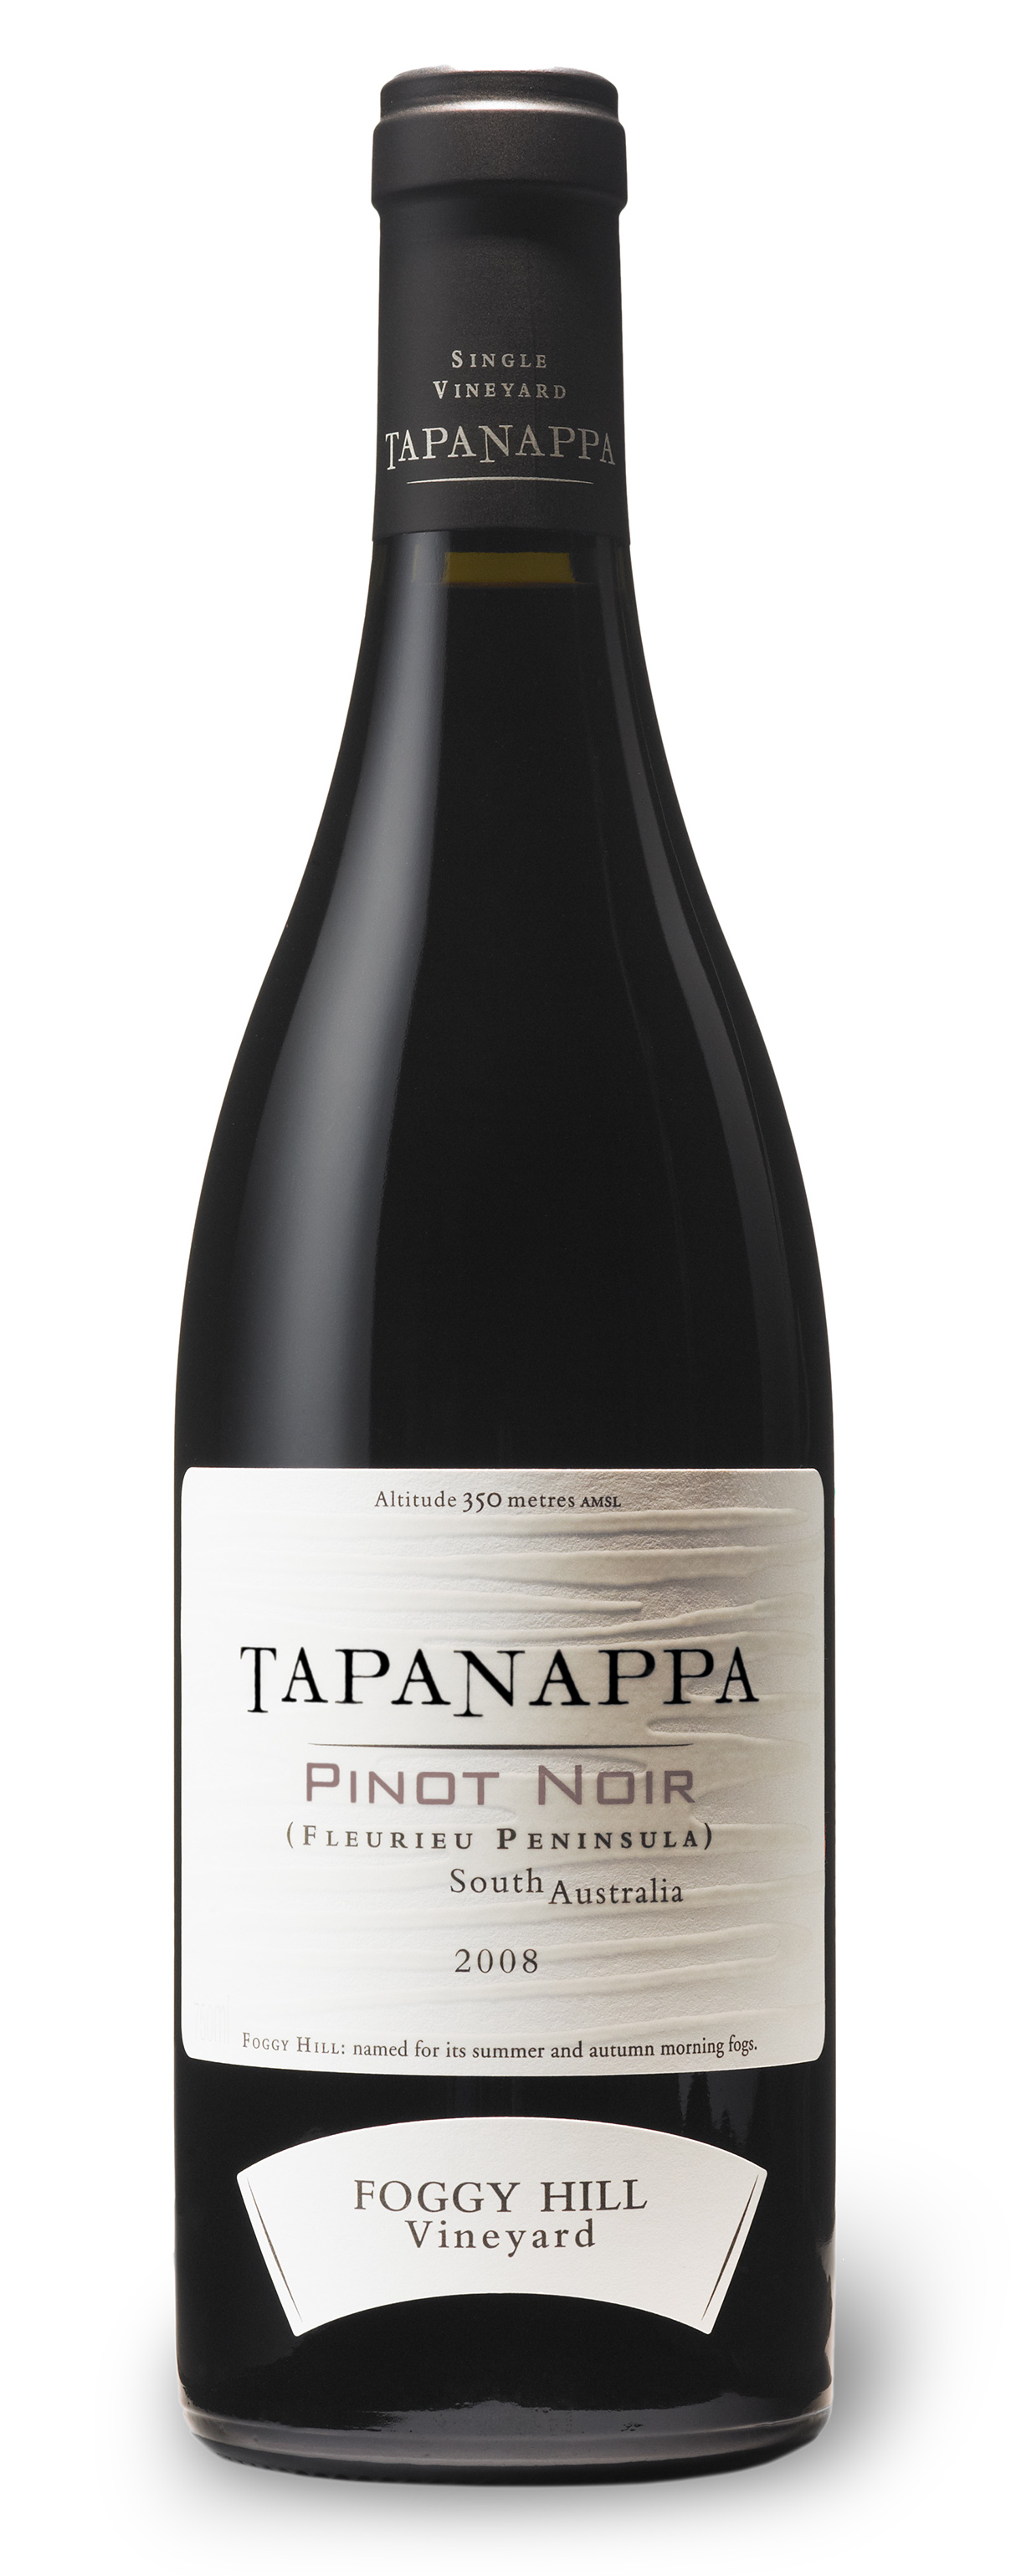 Tapanappa Foggy Hill Vineyard 2008 Pinot Noir bottleshot